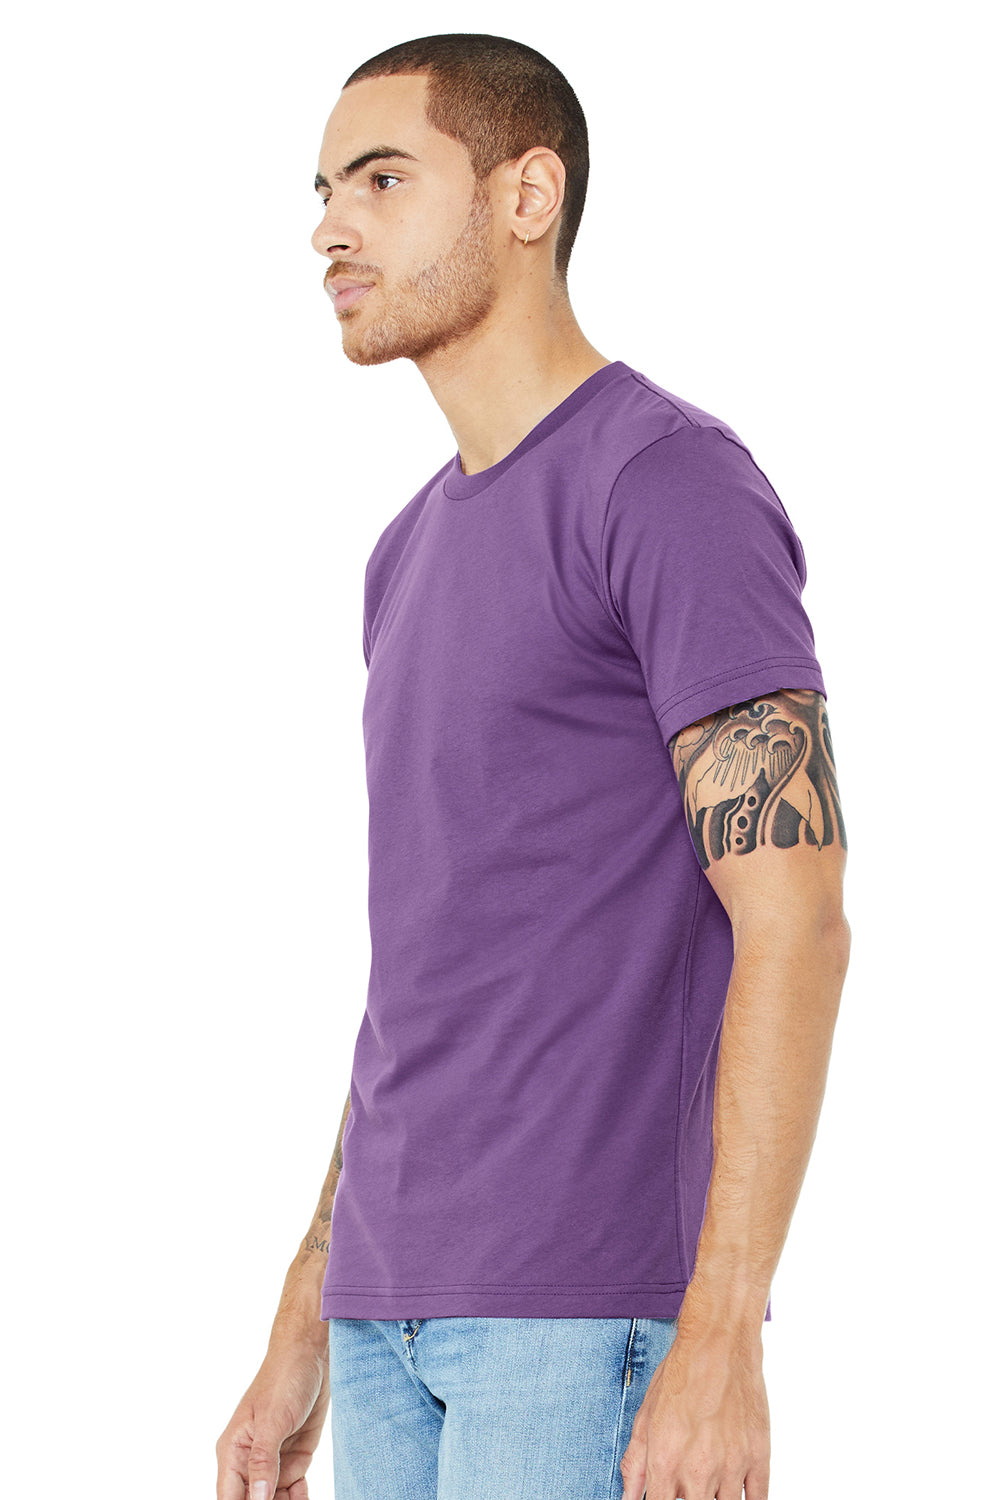 Bella + Canvas BC3001/3001C Mens Jersey Short Sleeve Crewneck T-Shirt Royal Purple Model 3Q